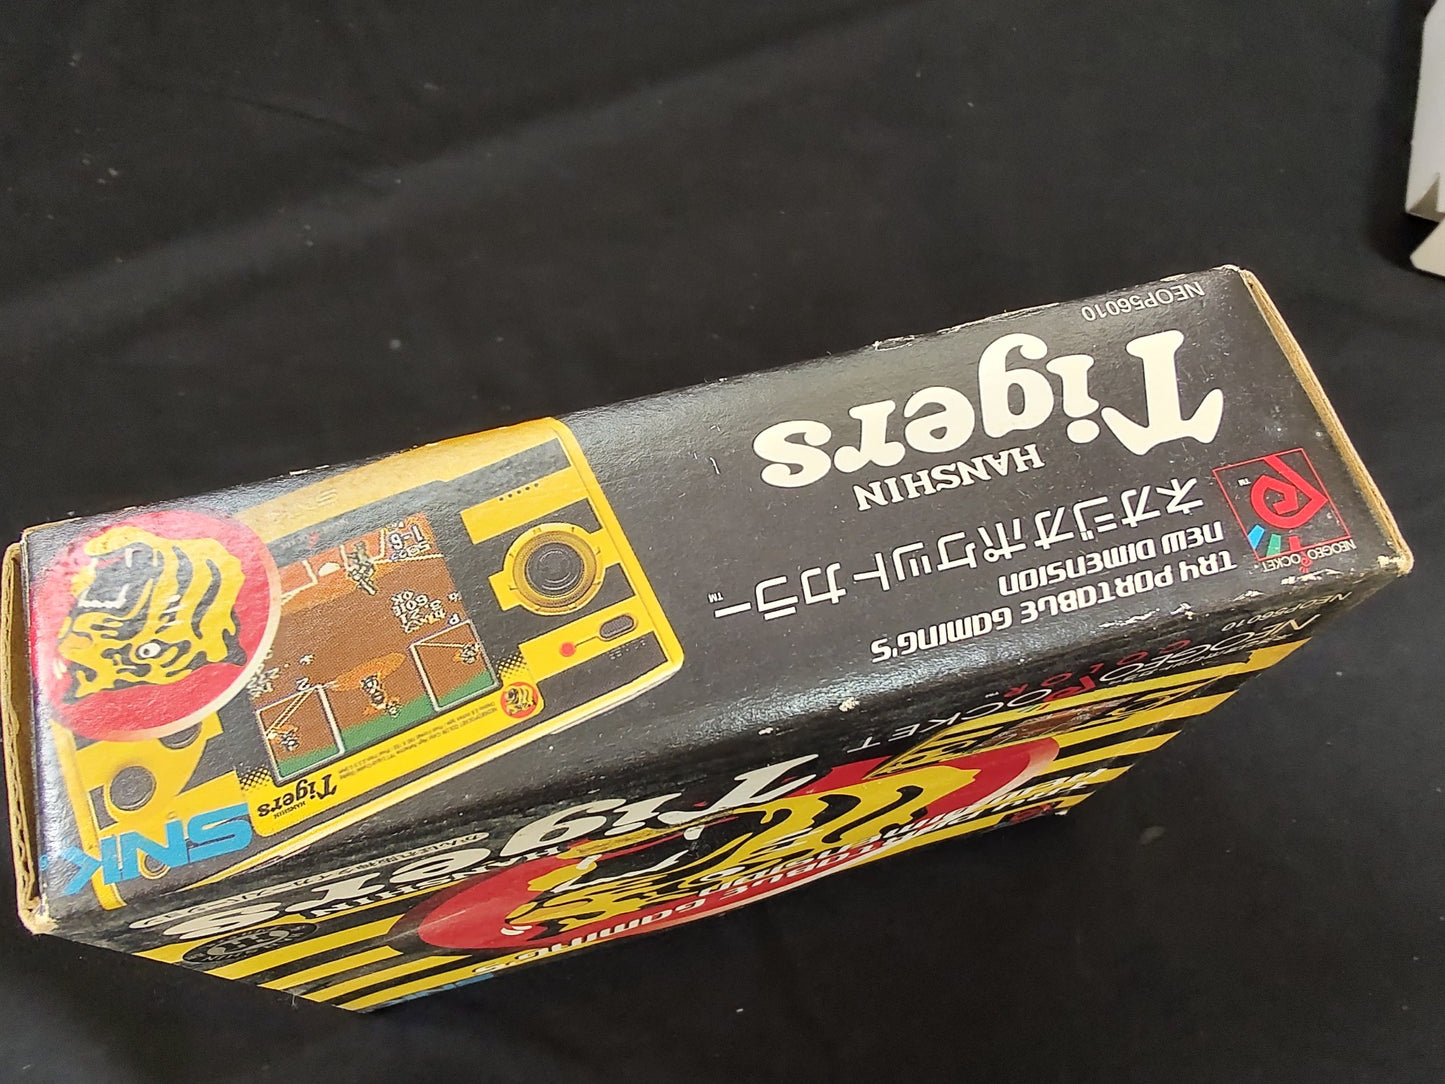 SNK NEOGEO POCKET Color Ganbare Hanshin Tigers Version with Box, Working -f0116-